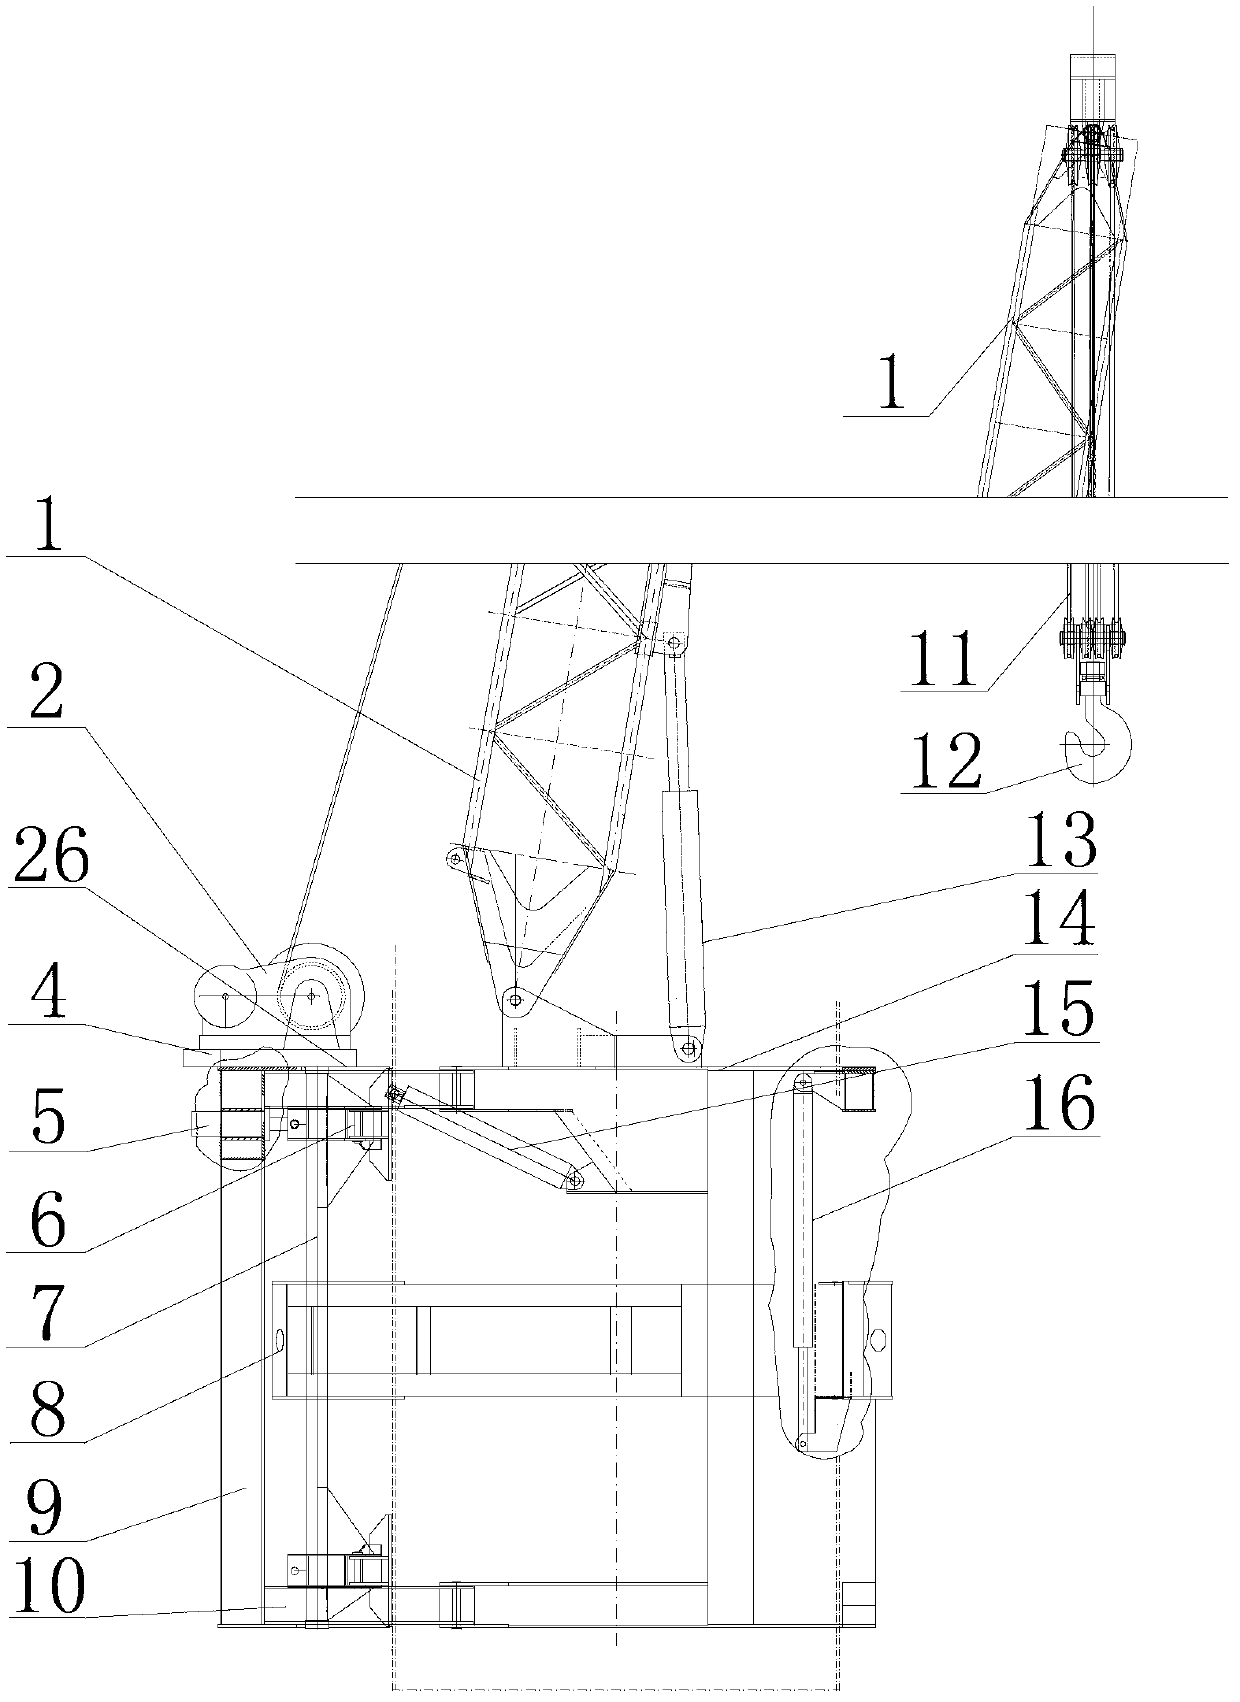 Adhering self-elevating-type tower crane for hoisting wind power equipment